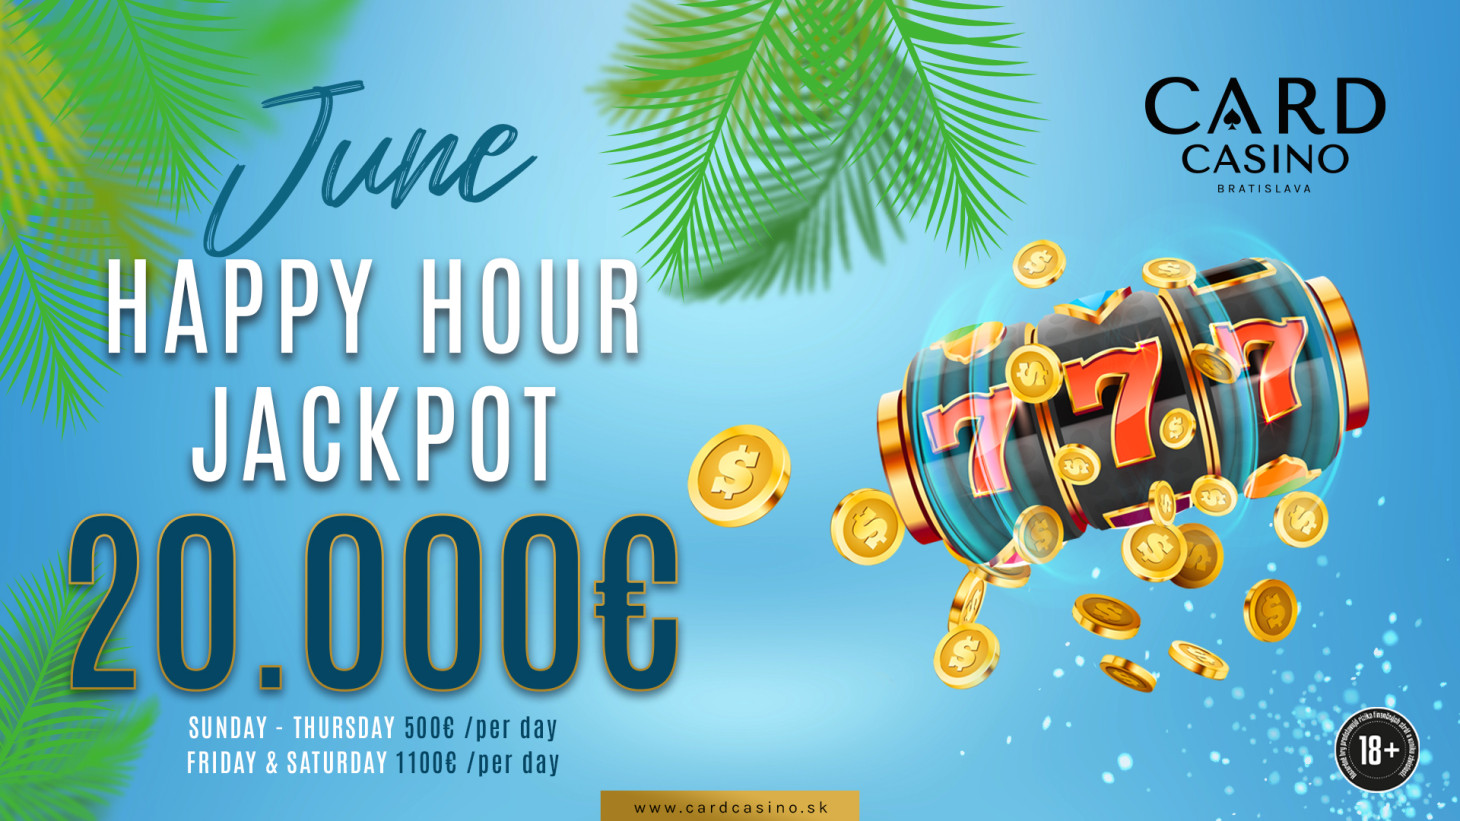 In June, we are giving away €20,000 in Happy Hour Jackpots!